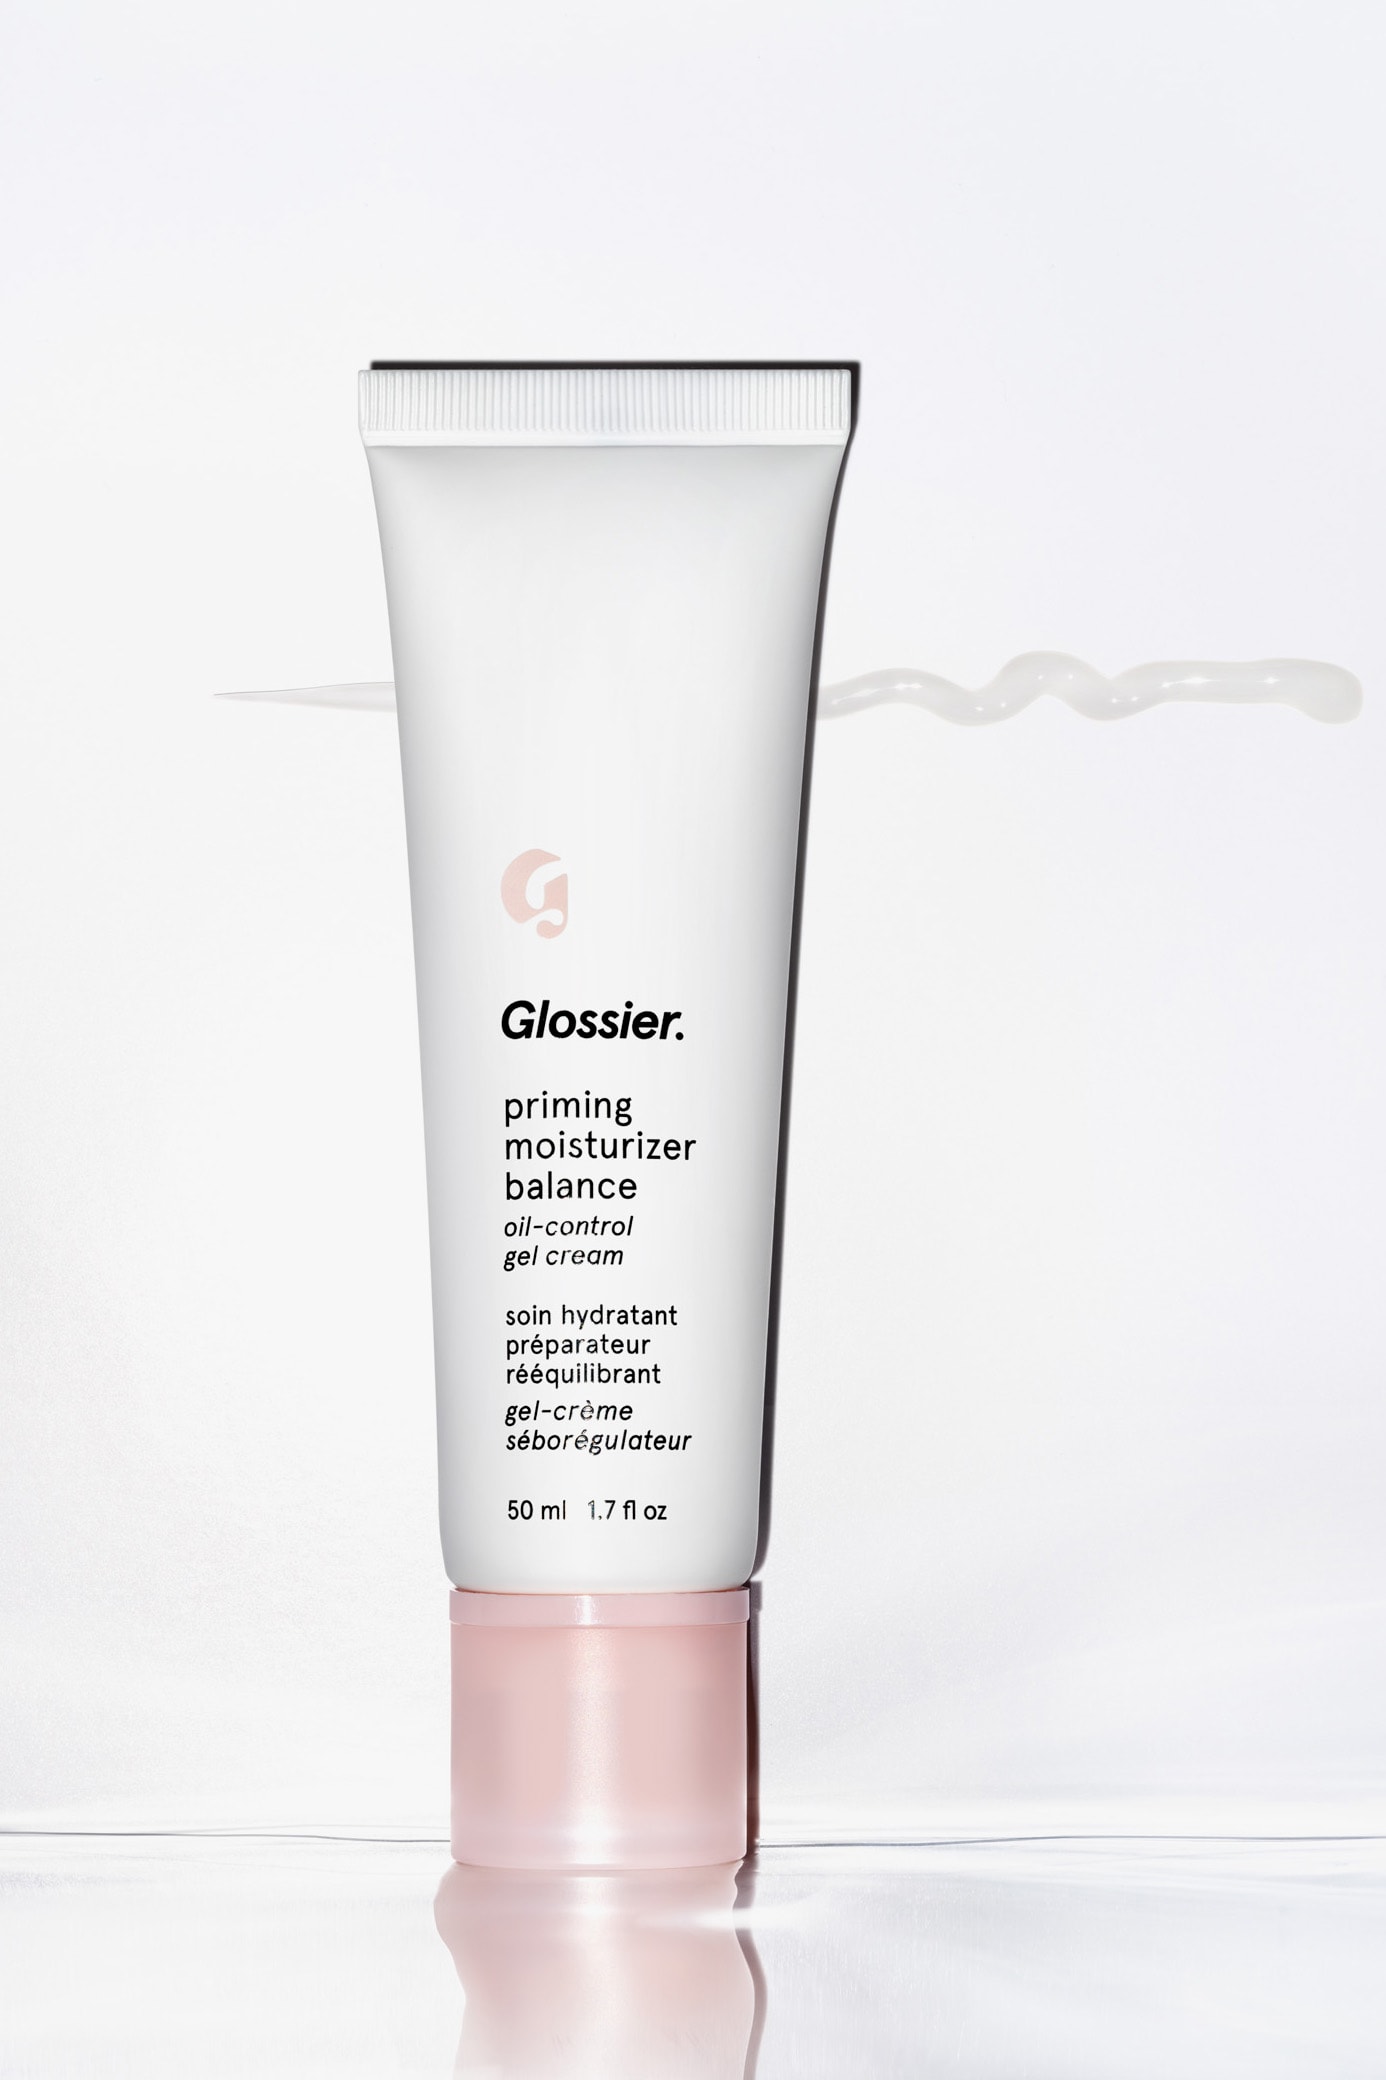 Glossier Priming Moisturizer Balance Release Product Oil Control Gel Cream Skincare Beauty